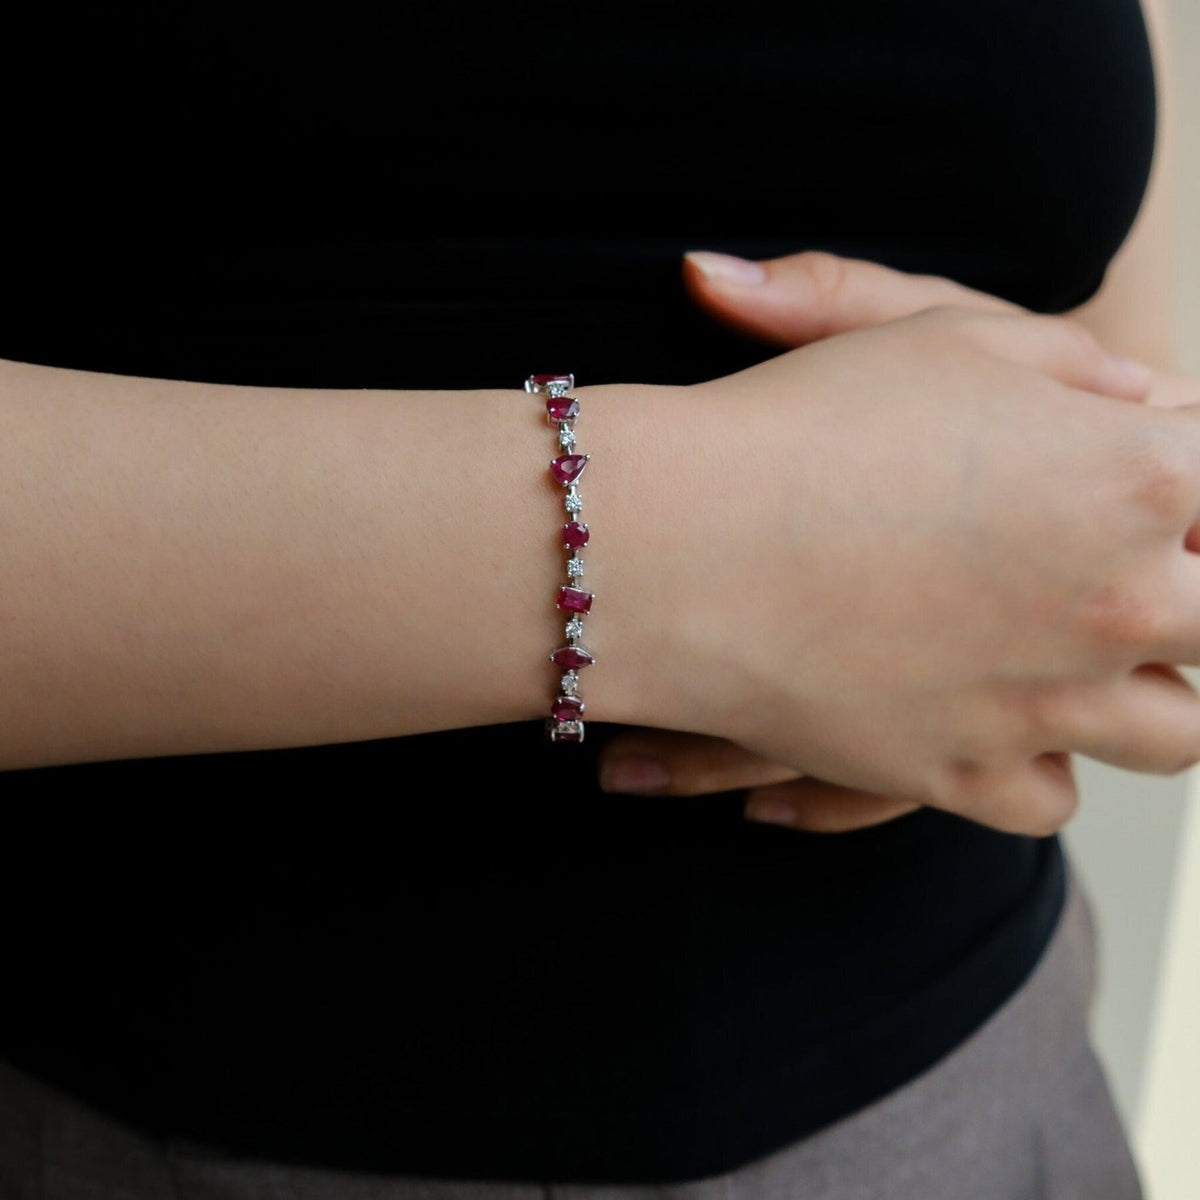 Elegant ruby bracelet from Robinson's Jewelers